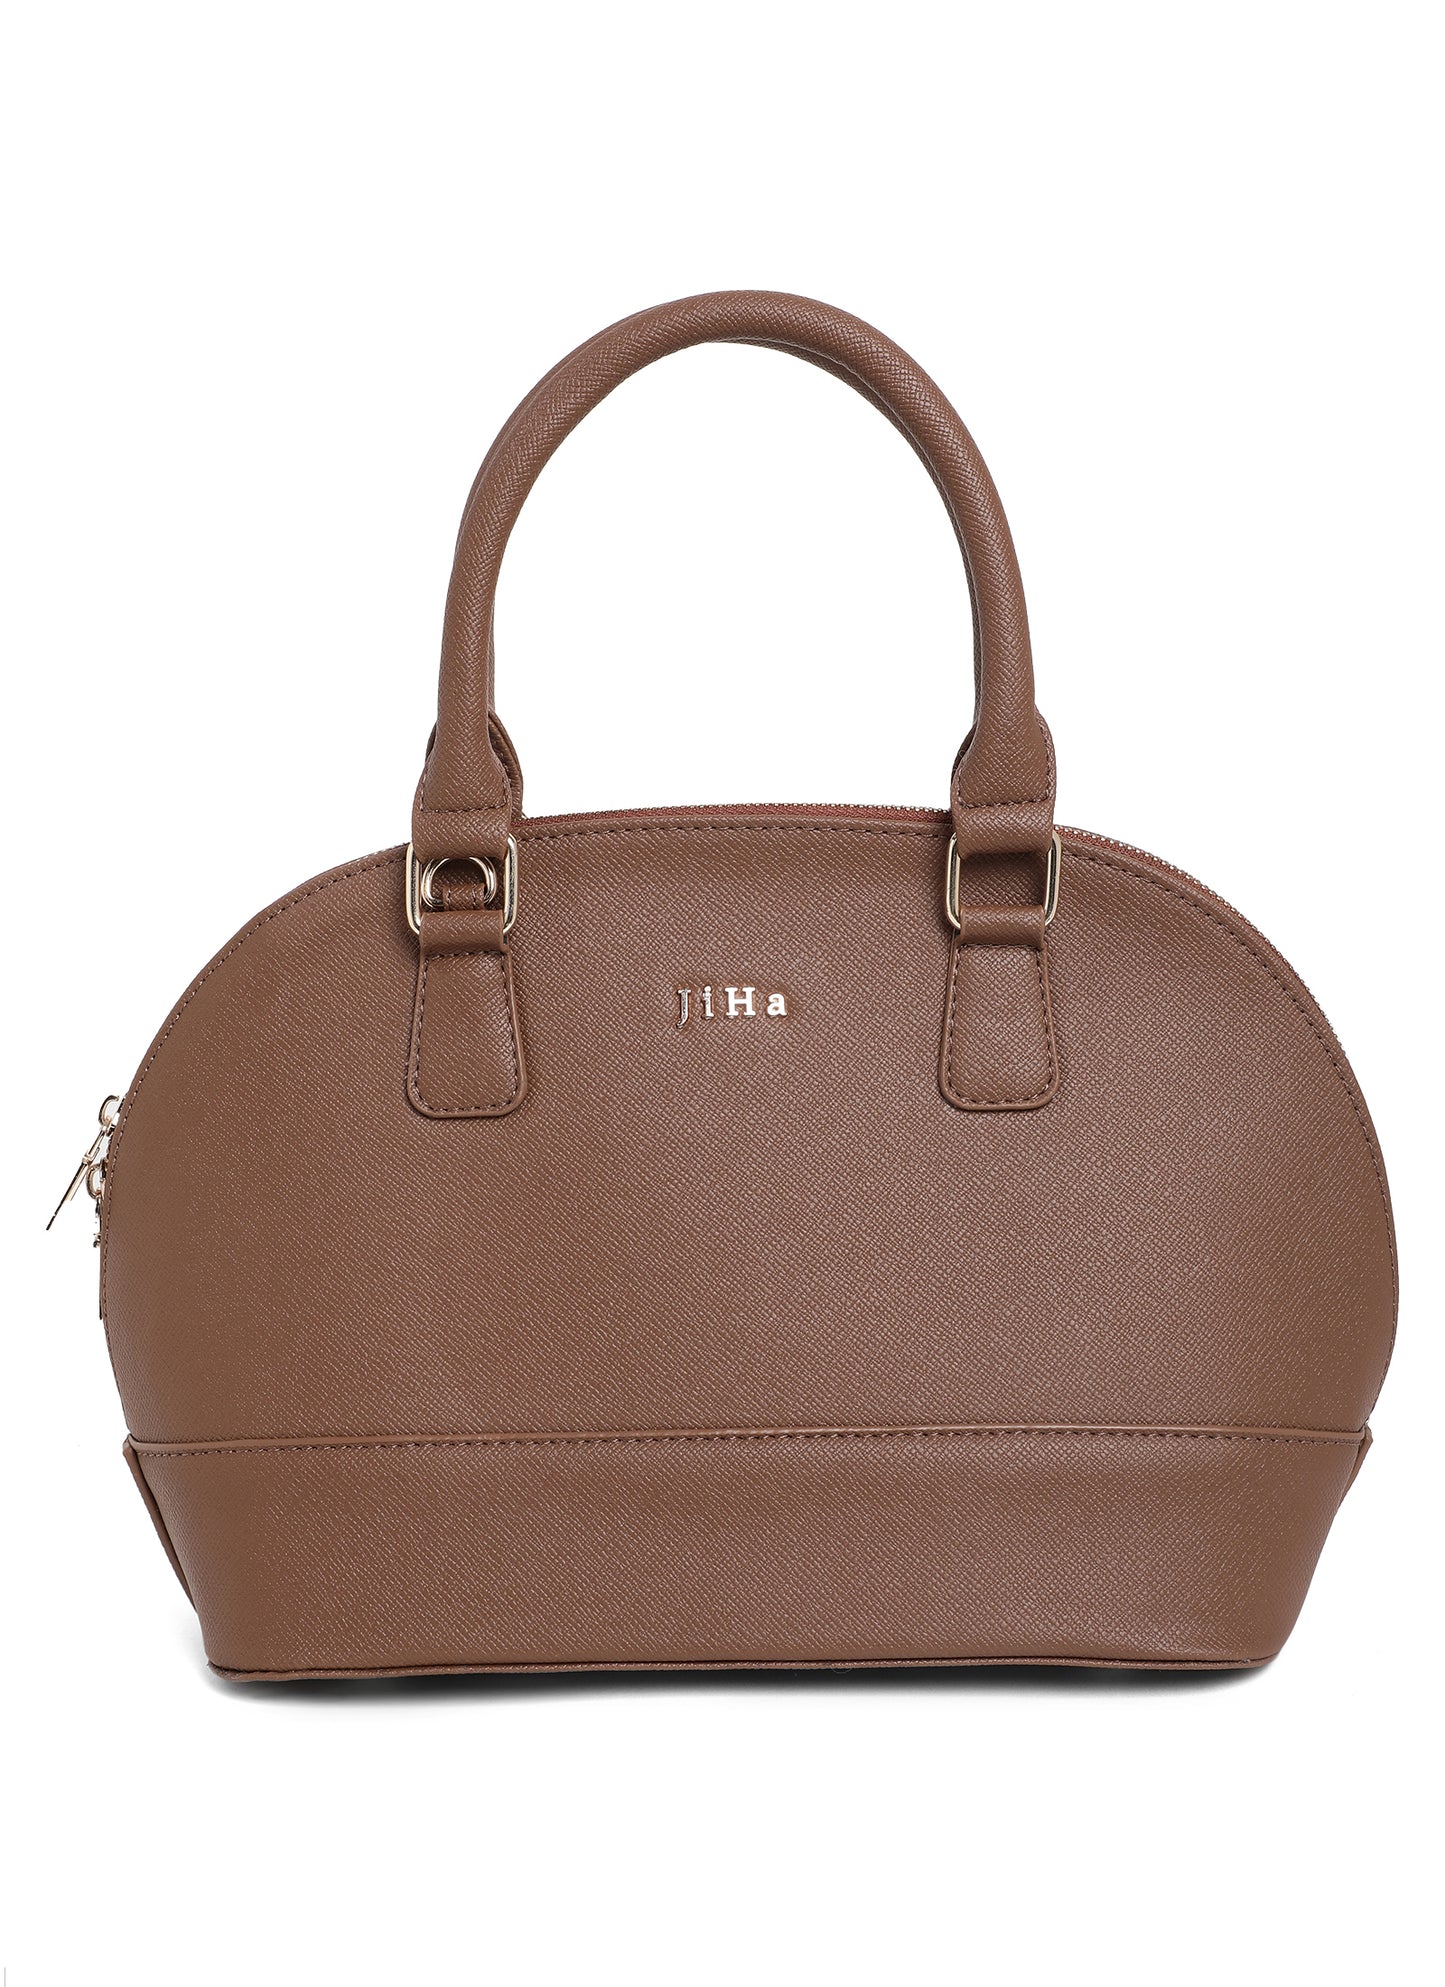 Jiha Brown Faux Leather Satchel Hand Bag/ Sling bag